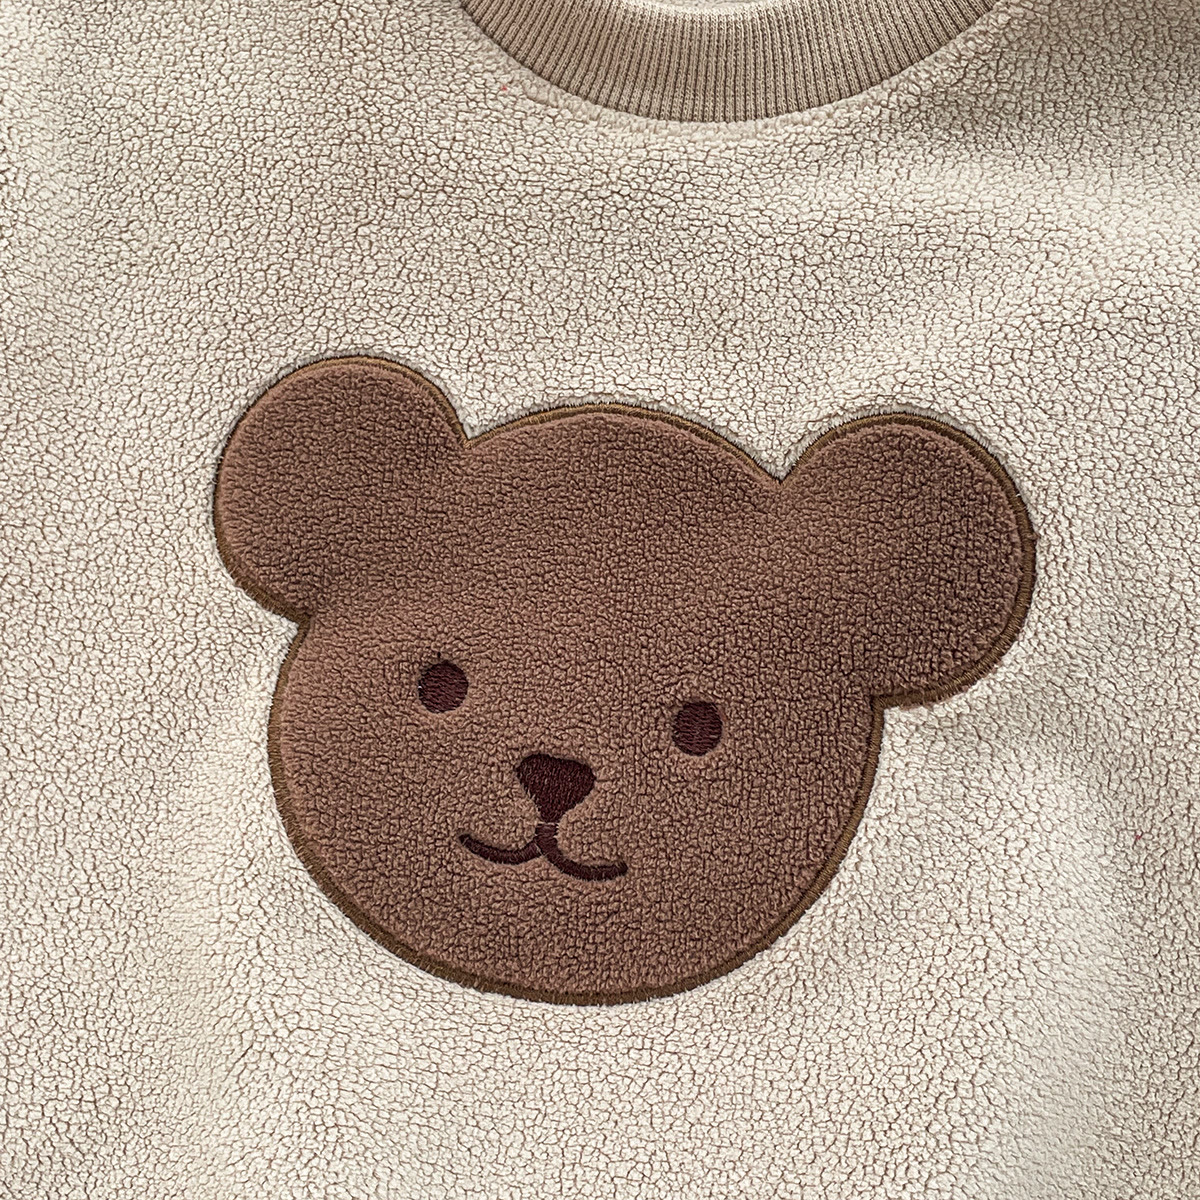 Teddy bear without a head. Palm Angels - Teddy Bear - Kids T-Shirt